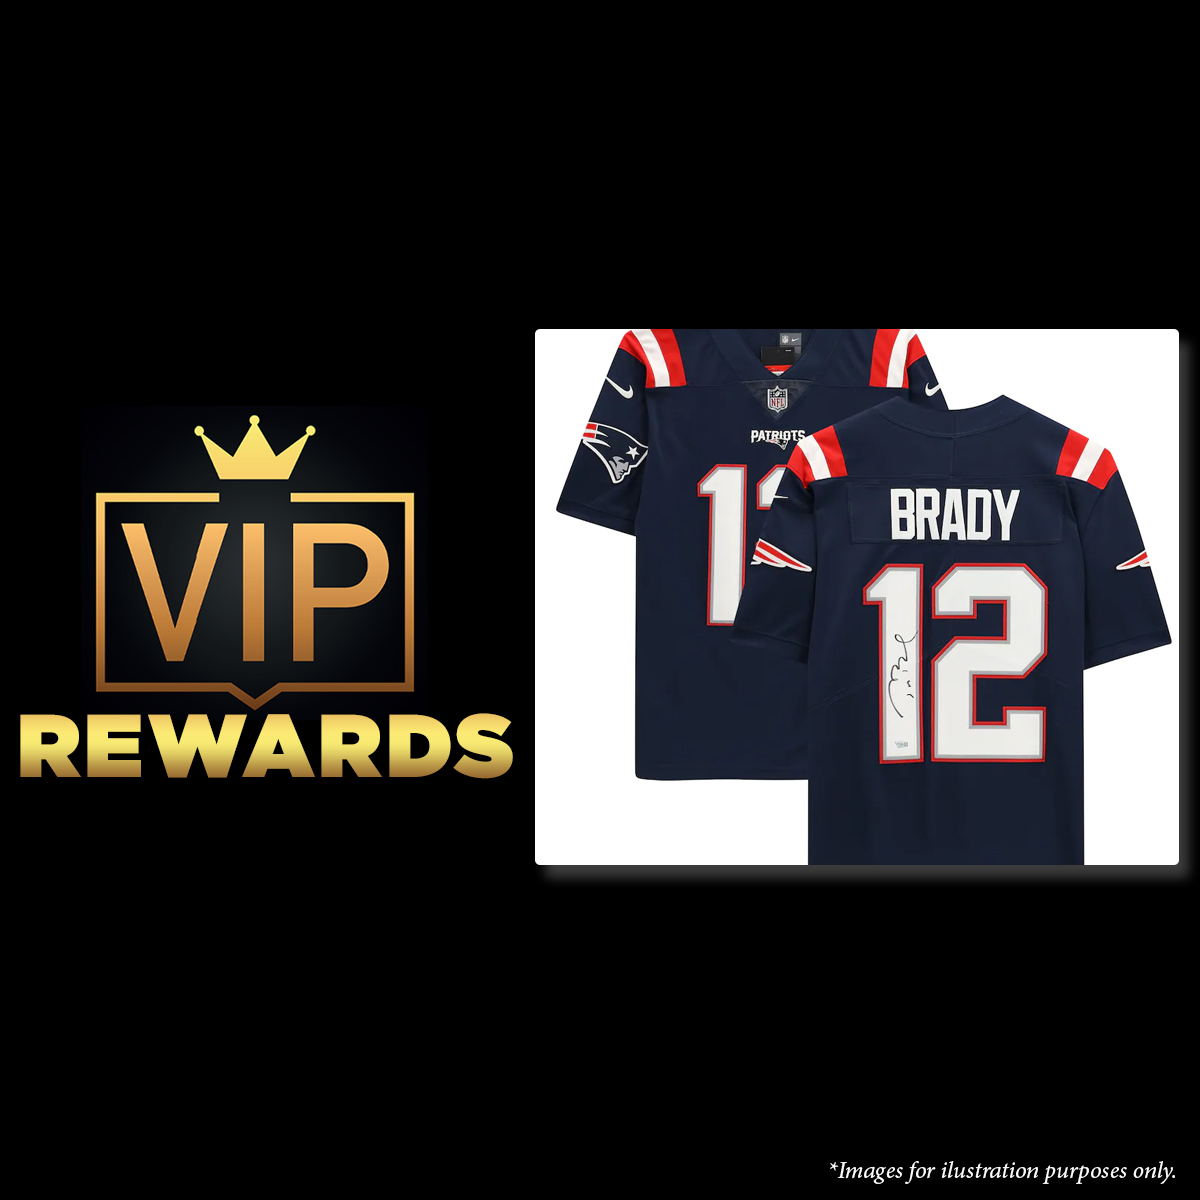 Autographed Tom Brady Patriots Jersey